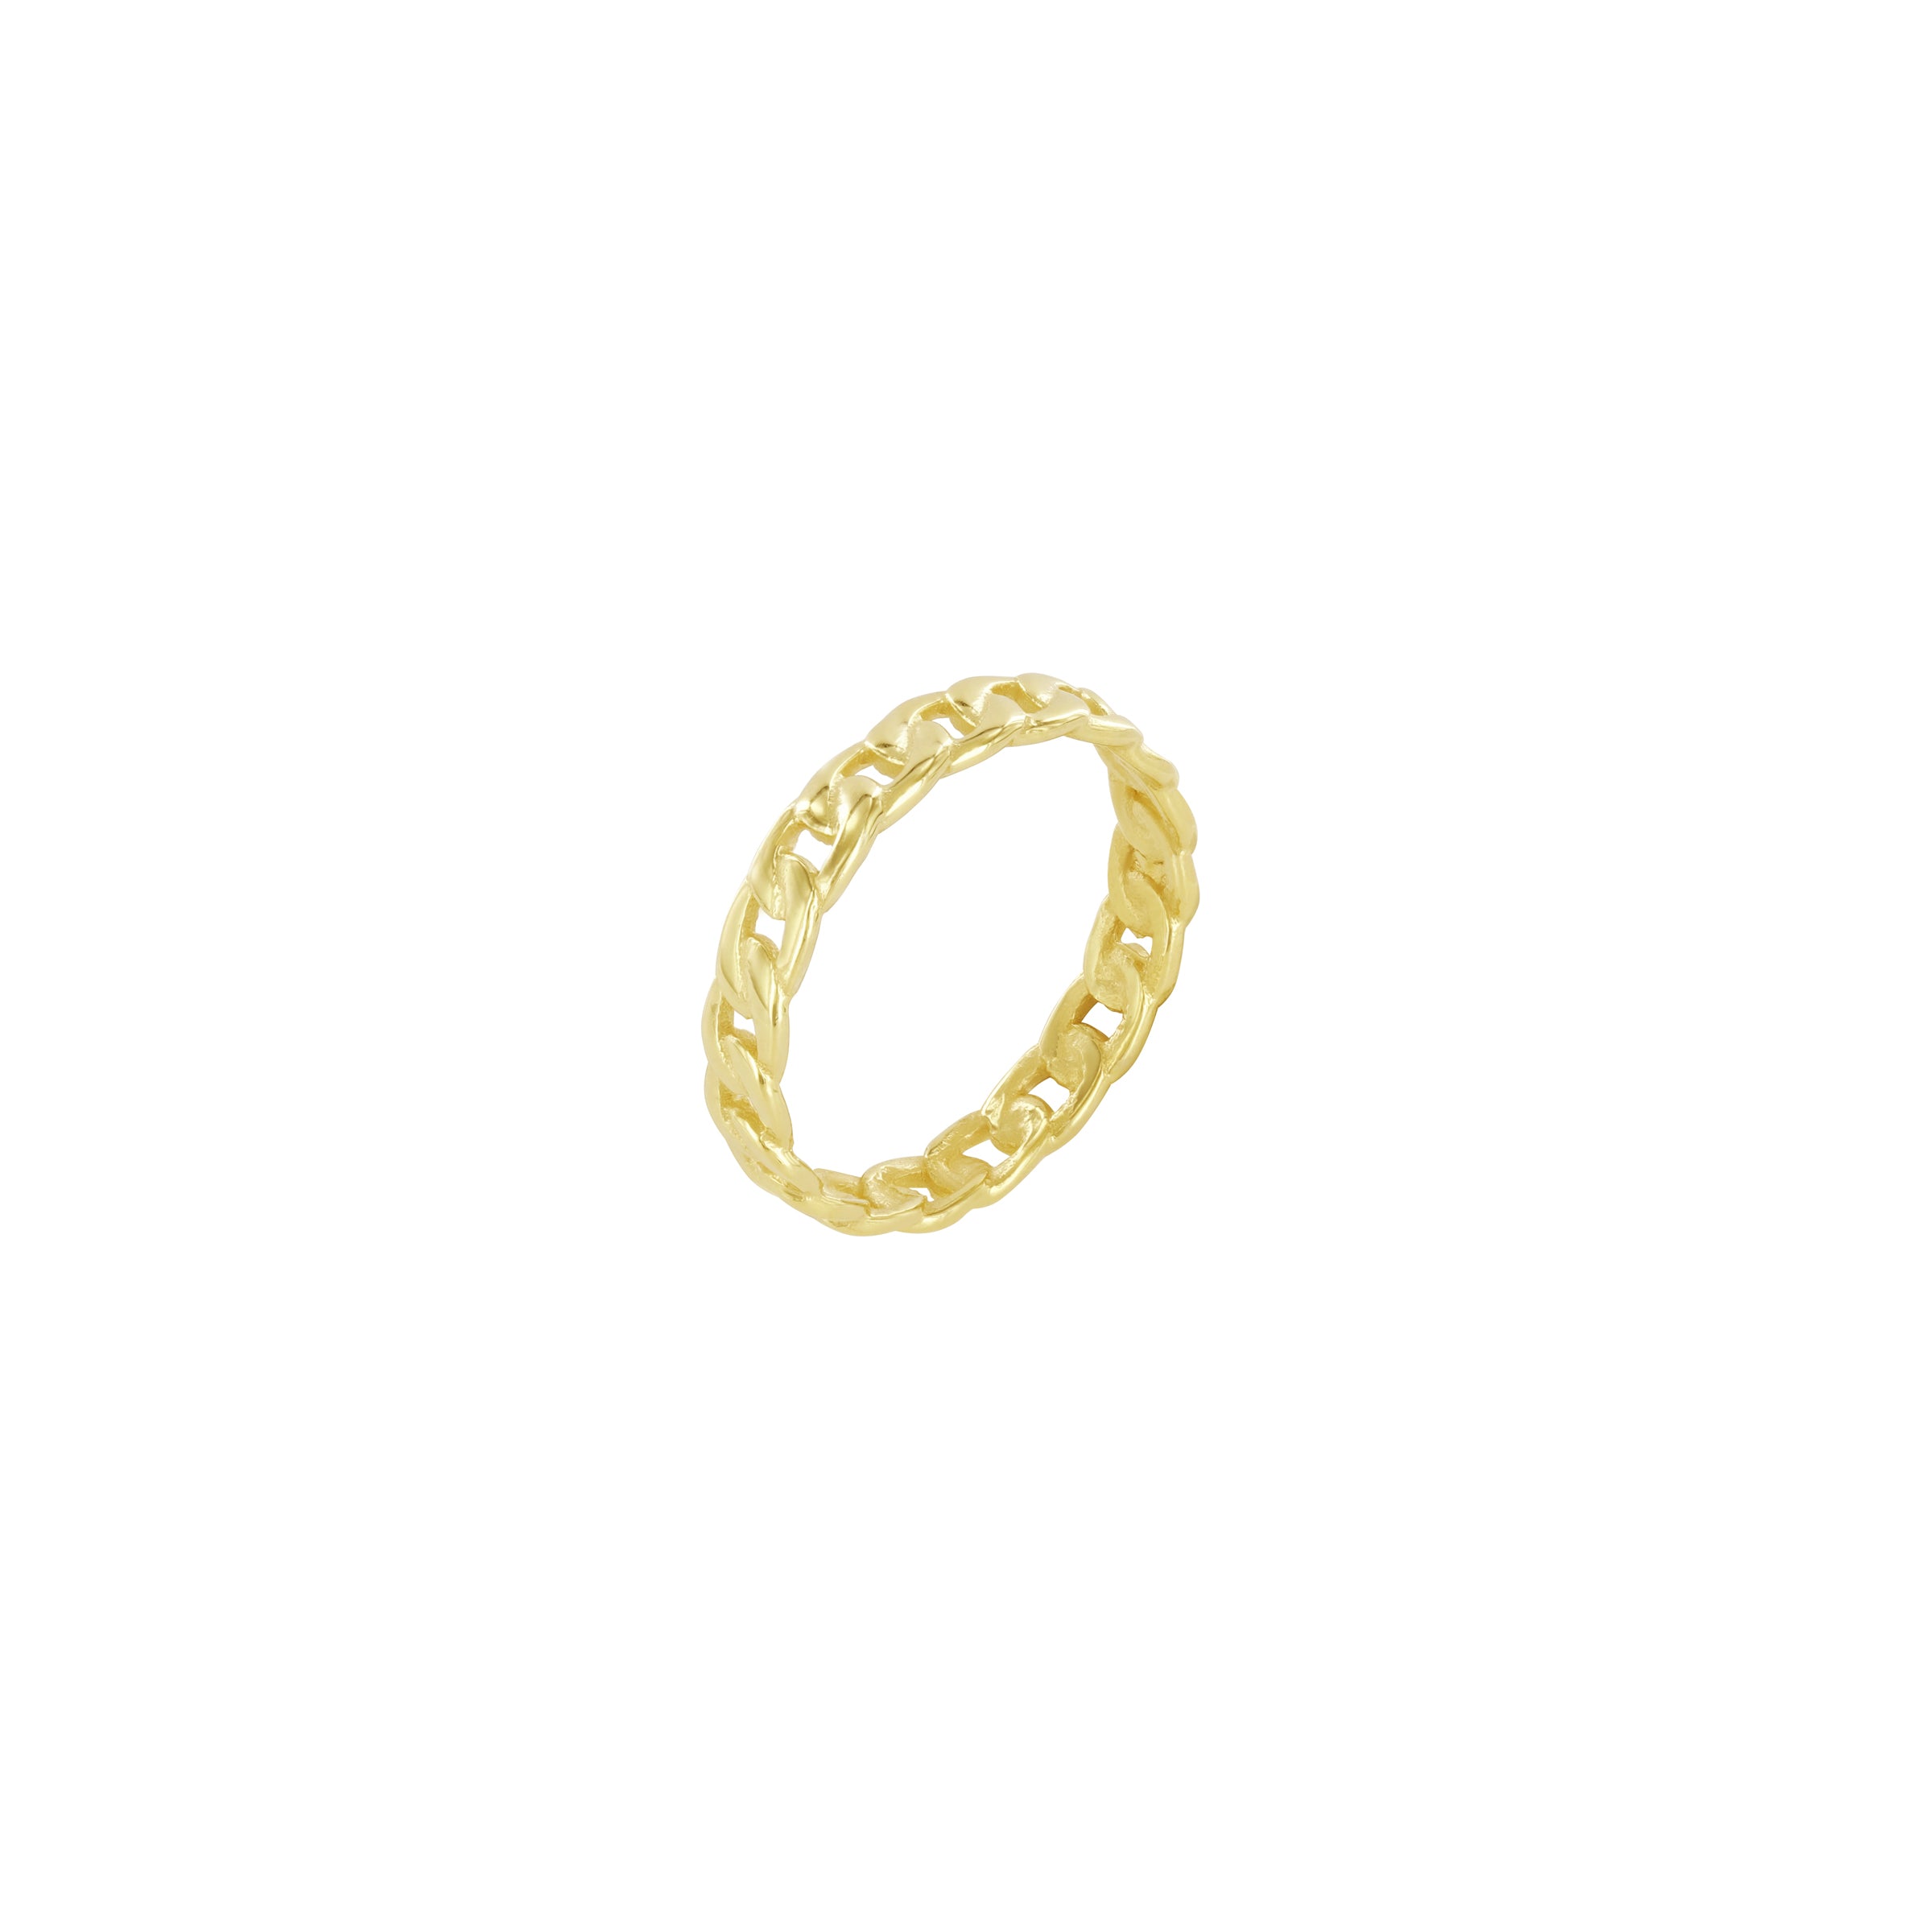 Chain Ring Gold Vermeil